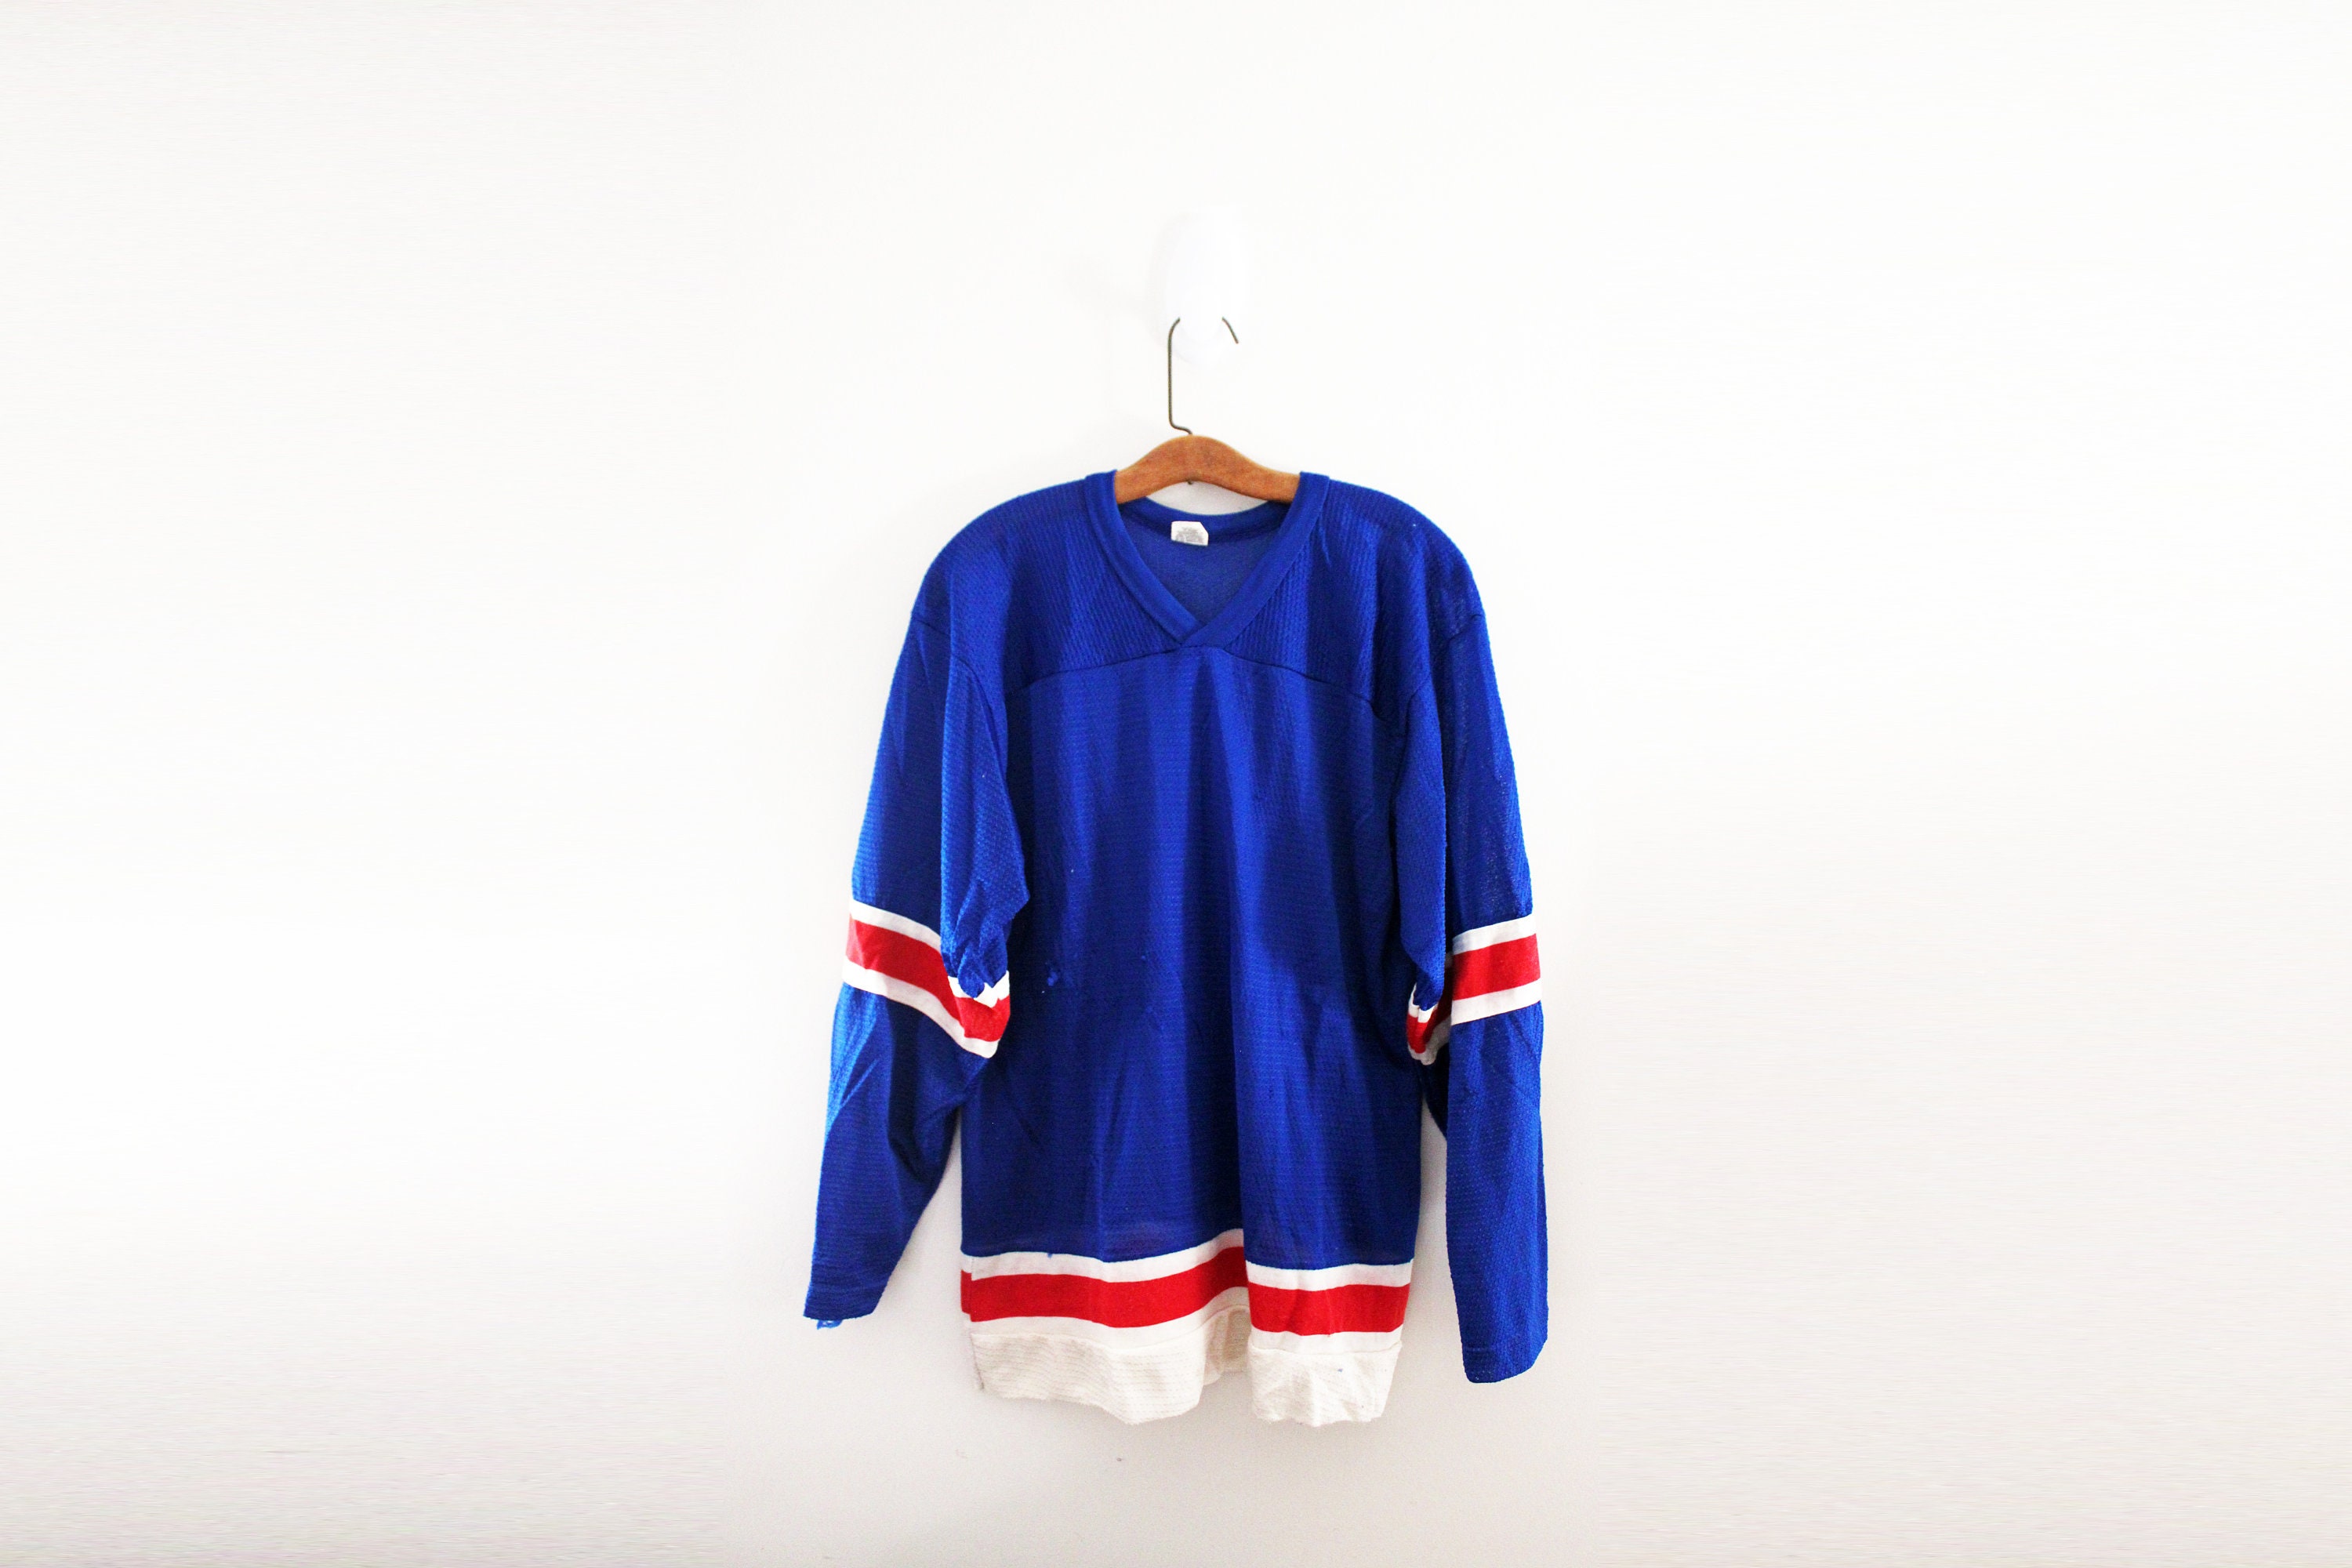 NHL Men's Sweater - Blue - S